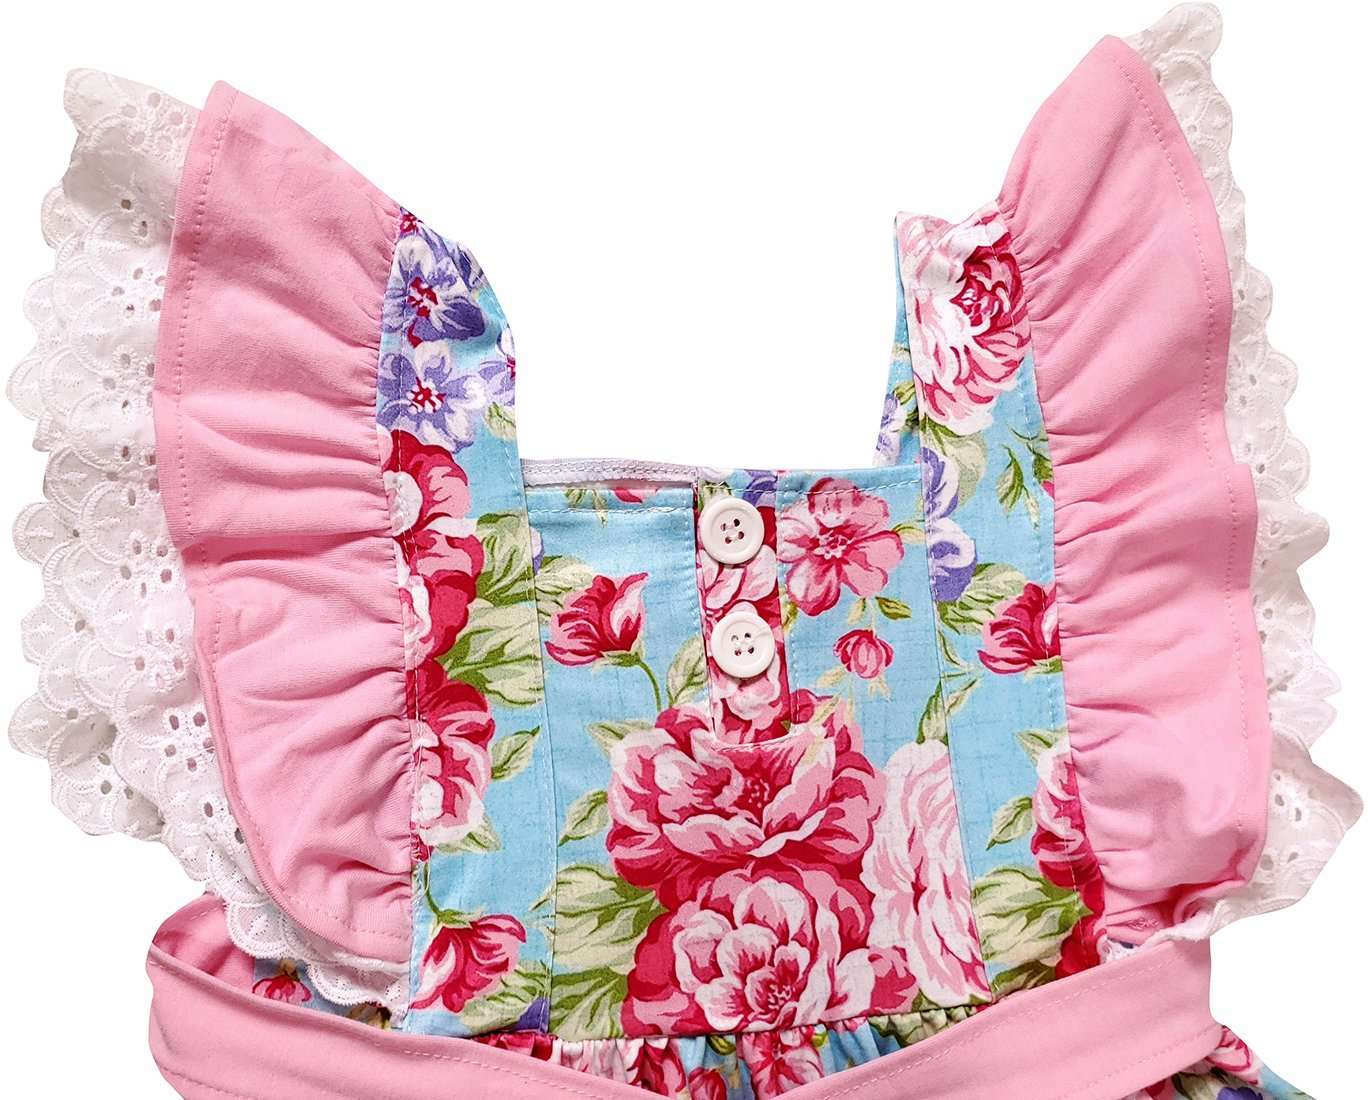 Angeline Kids:Baby Little Girls Boutique Floral Unicorn Ruffle Dress Legging Set